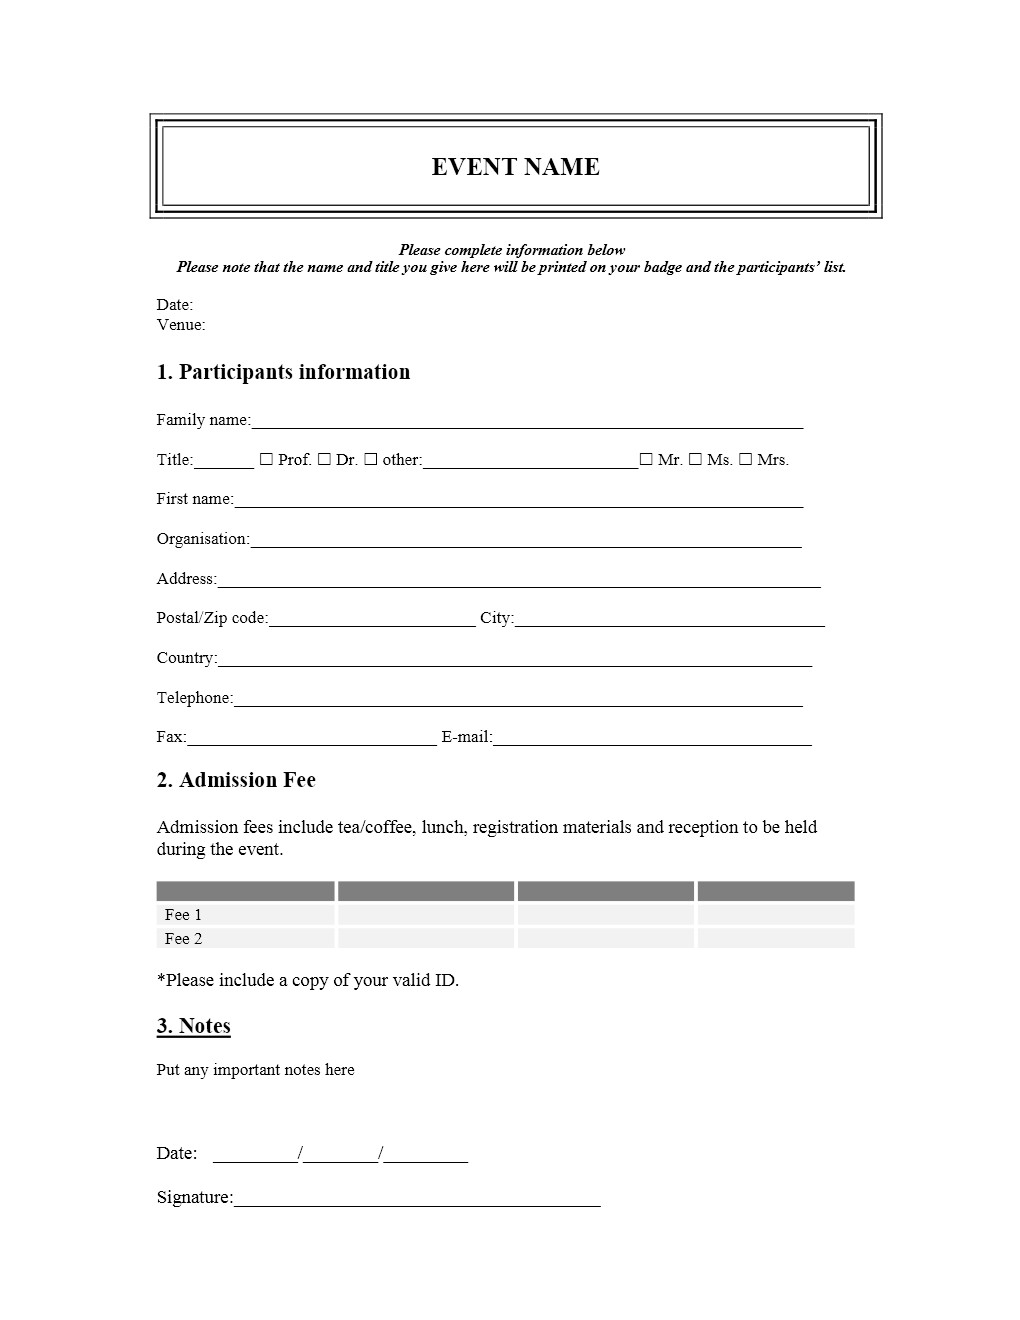 Registration forms Template Free event Registration form